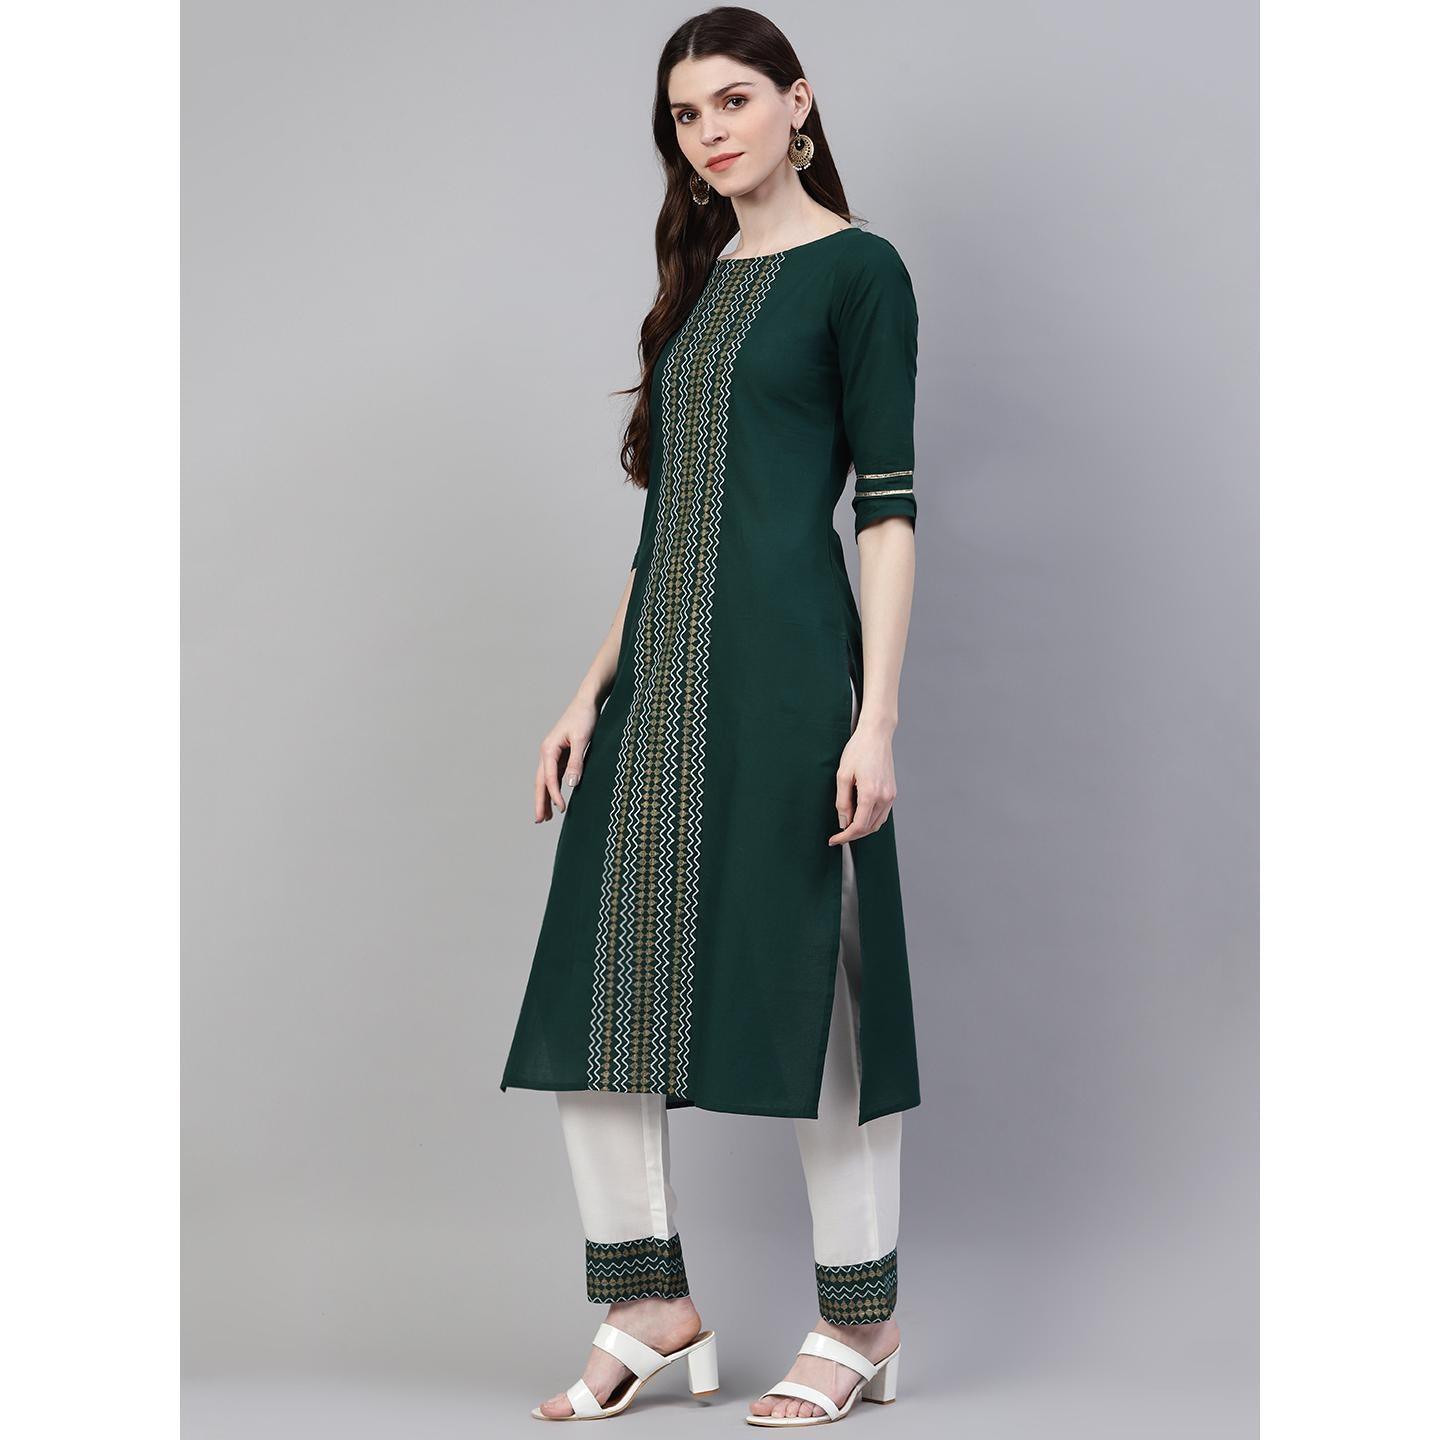 Stylum Preferable Dark Green Colored Casual Wear Printed Cotton Kurti -  Pant Set With Dupatta